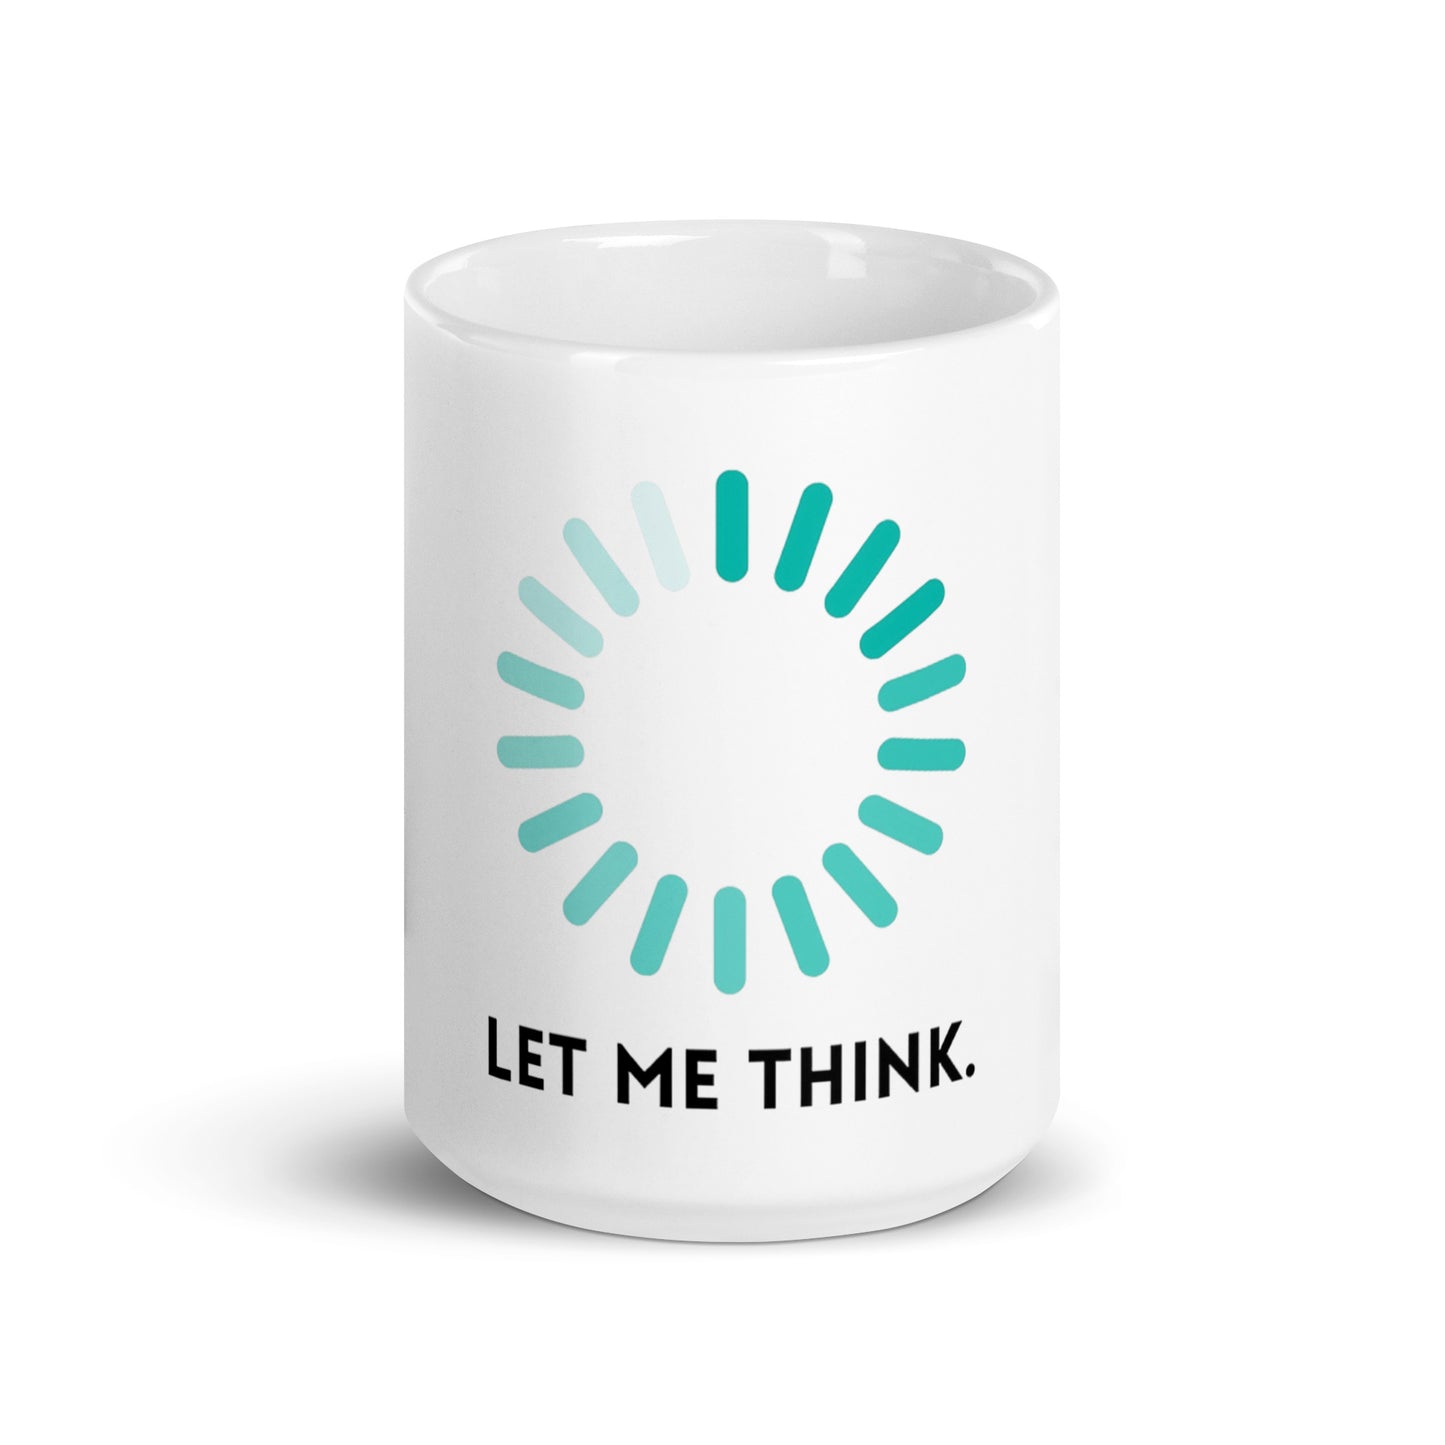 Let Me Think mug